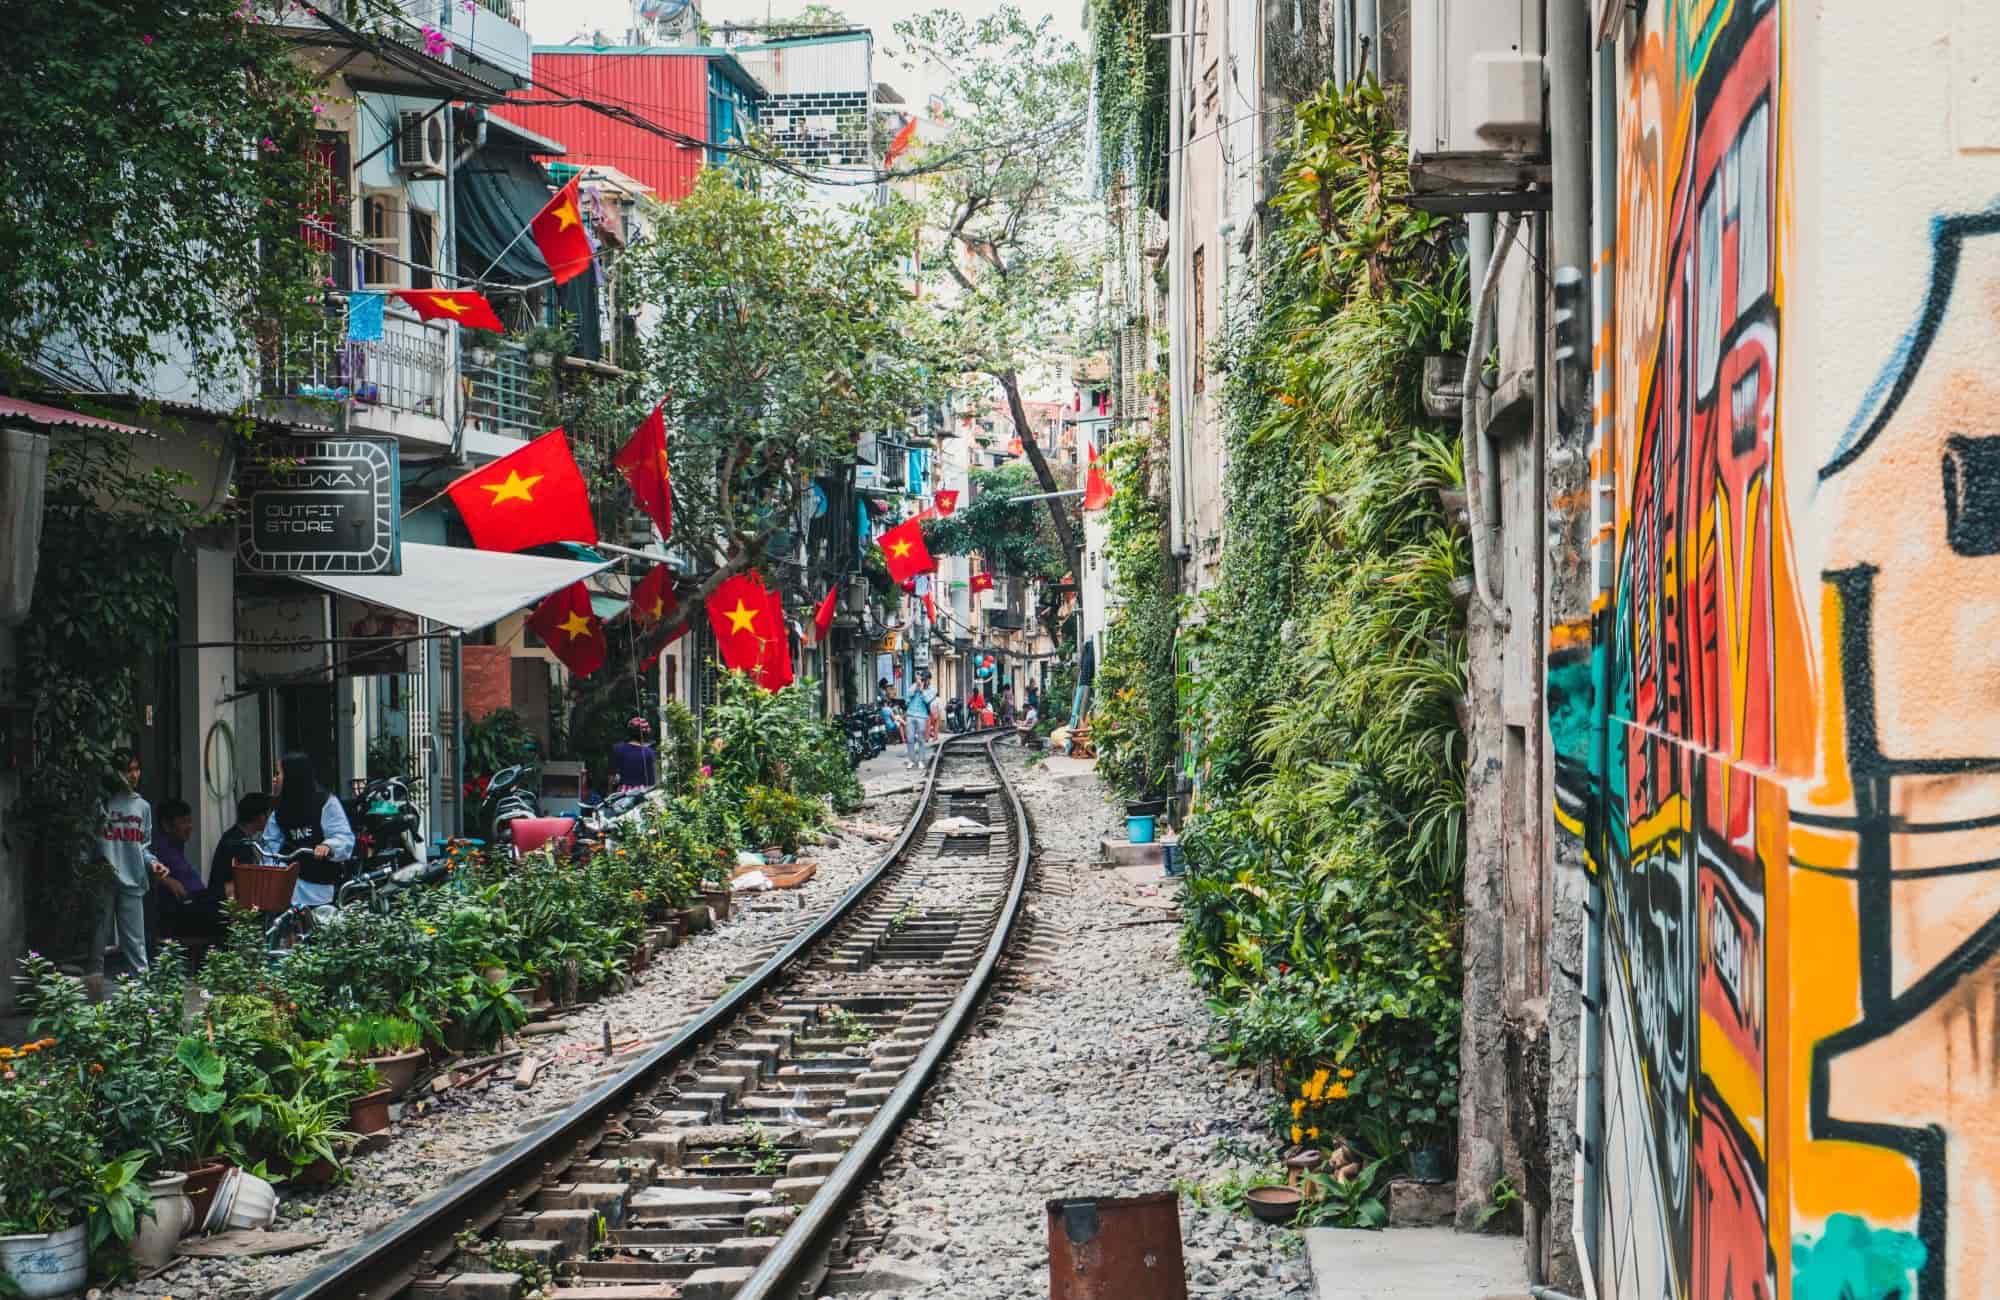 Voyage Hanoi - Rue du train Hanoi - Amplitudes